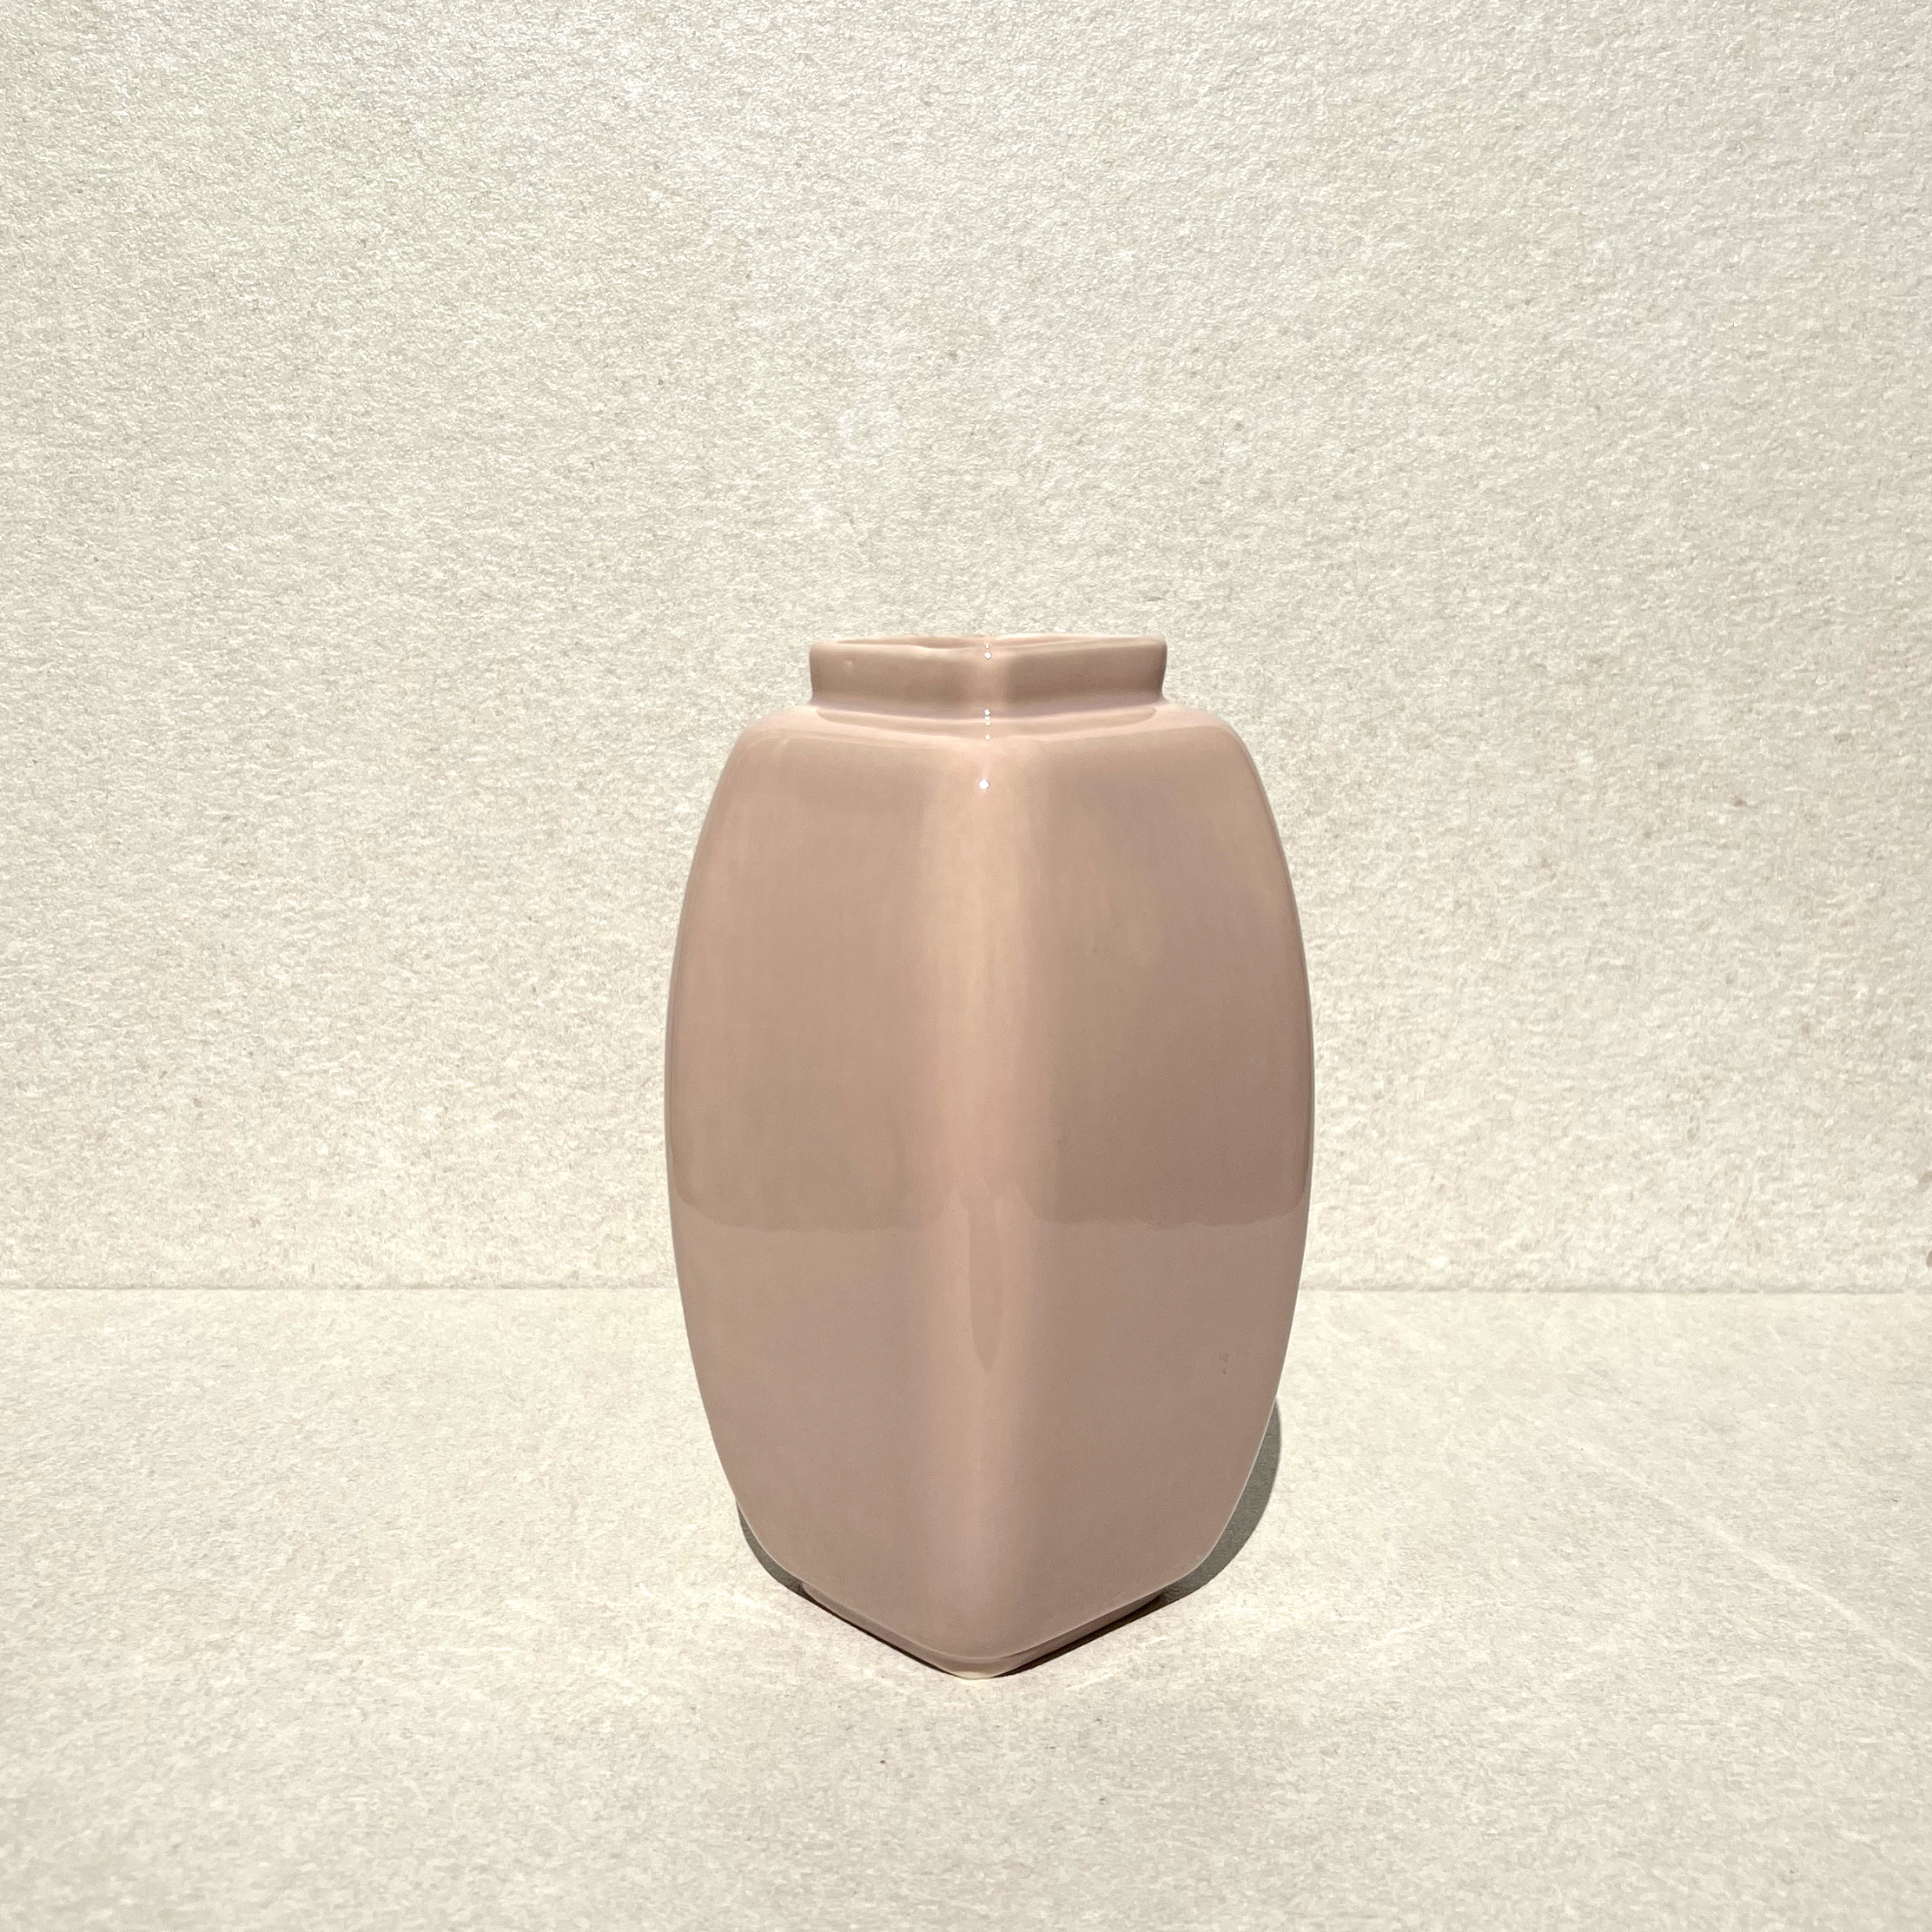 USA Hyalyn Pottery PinkBeige Ceramic Vase 1970s